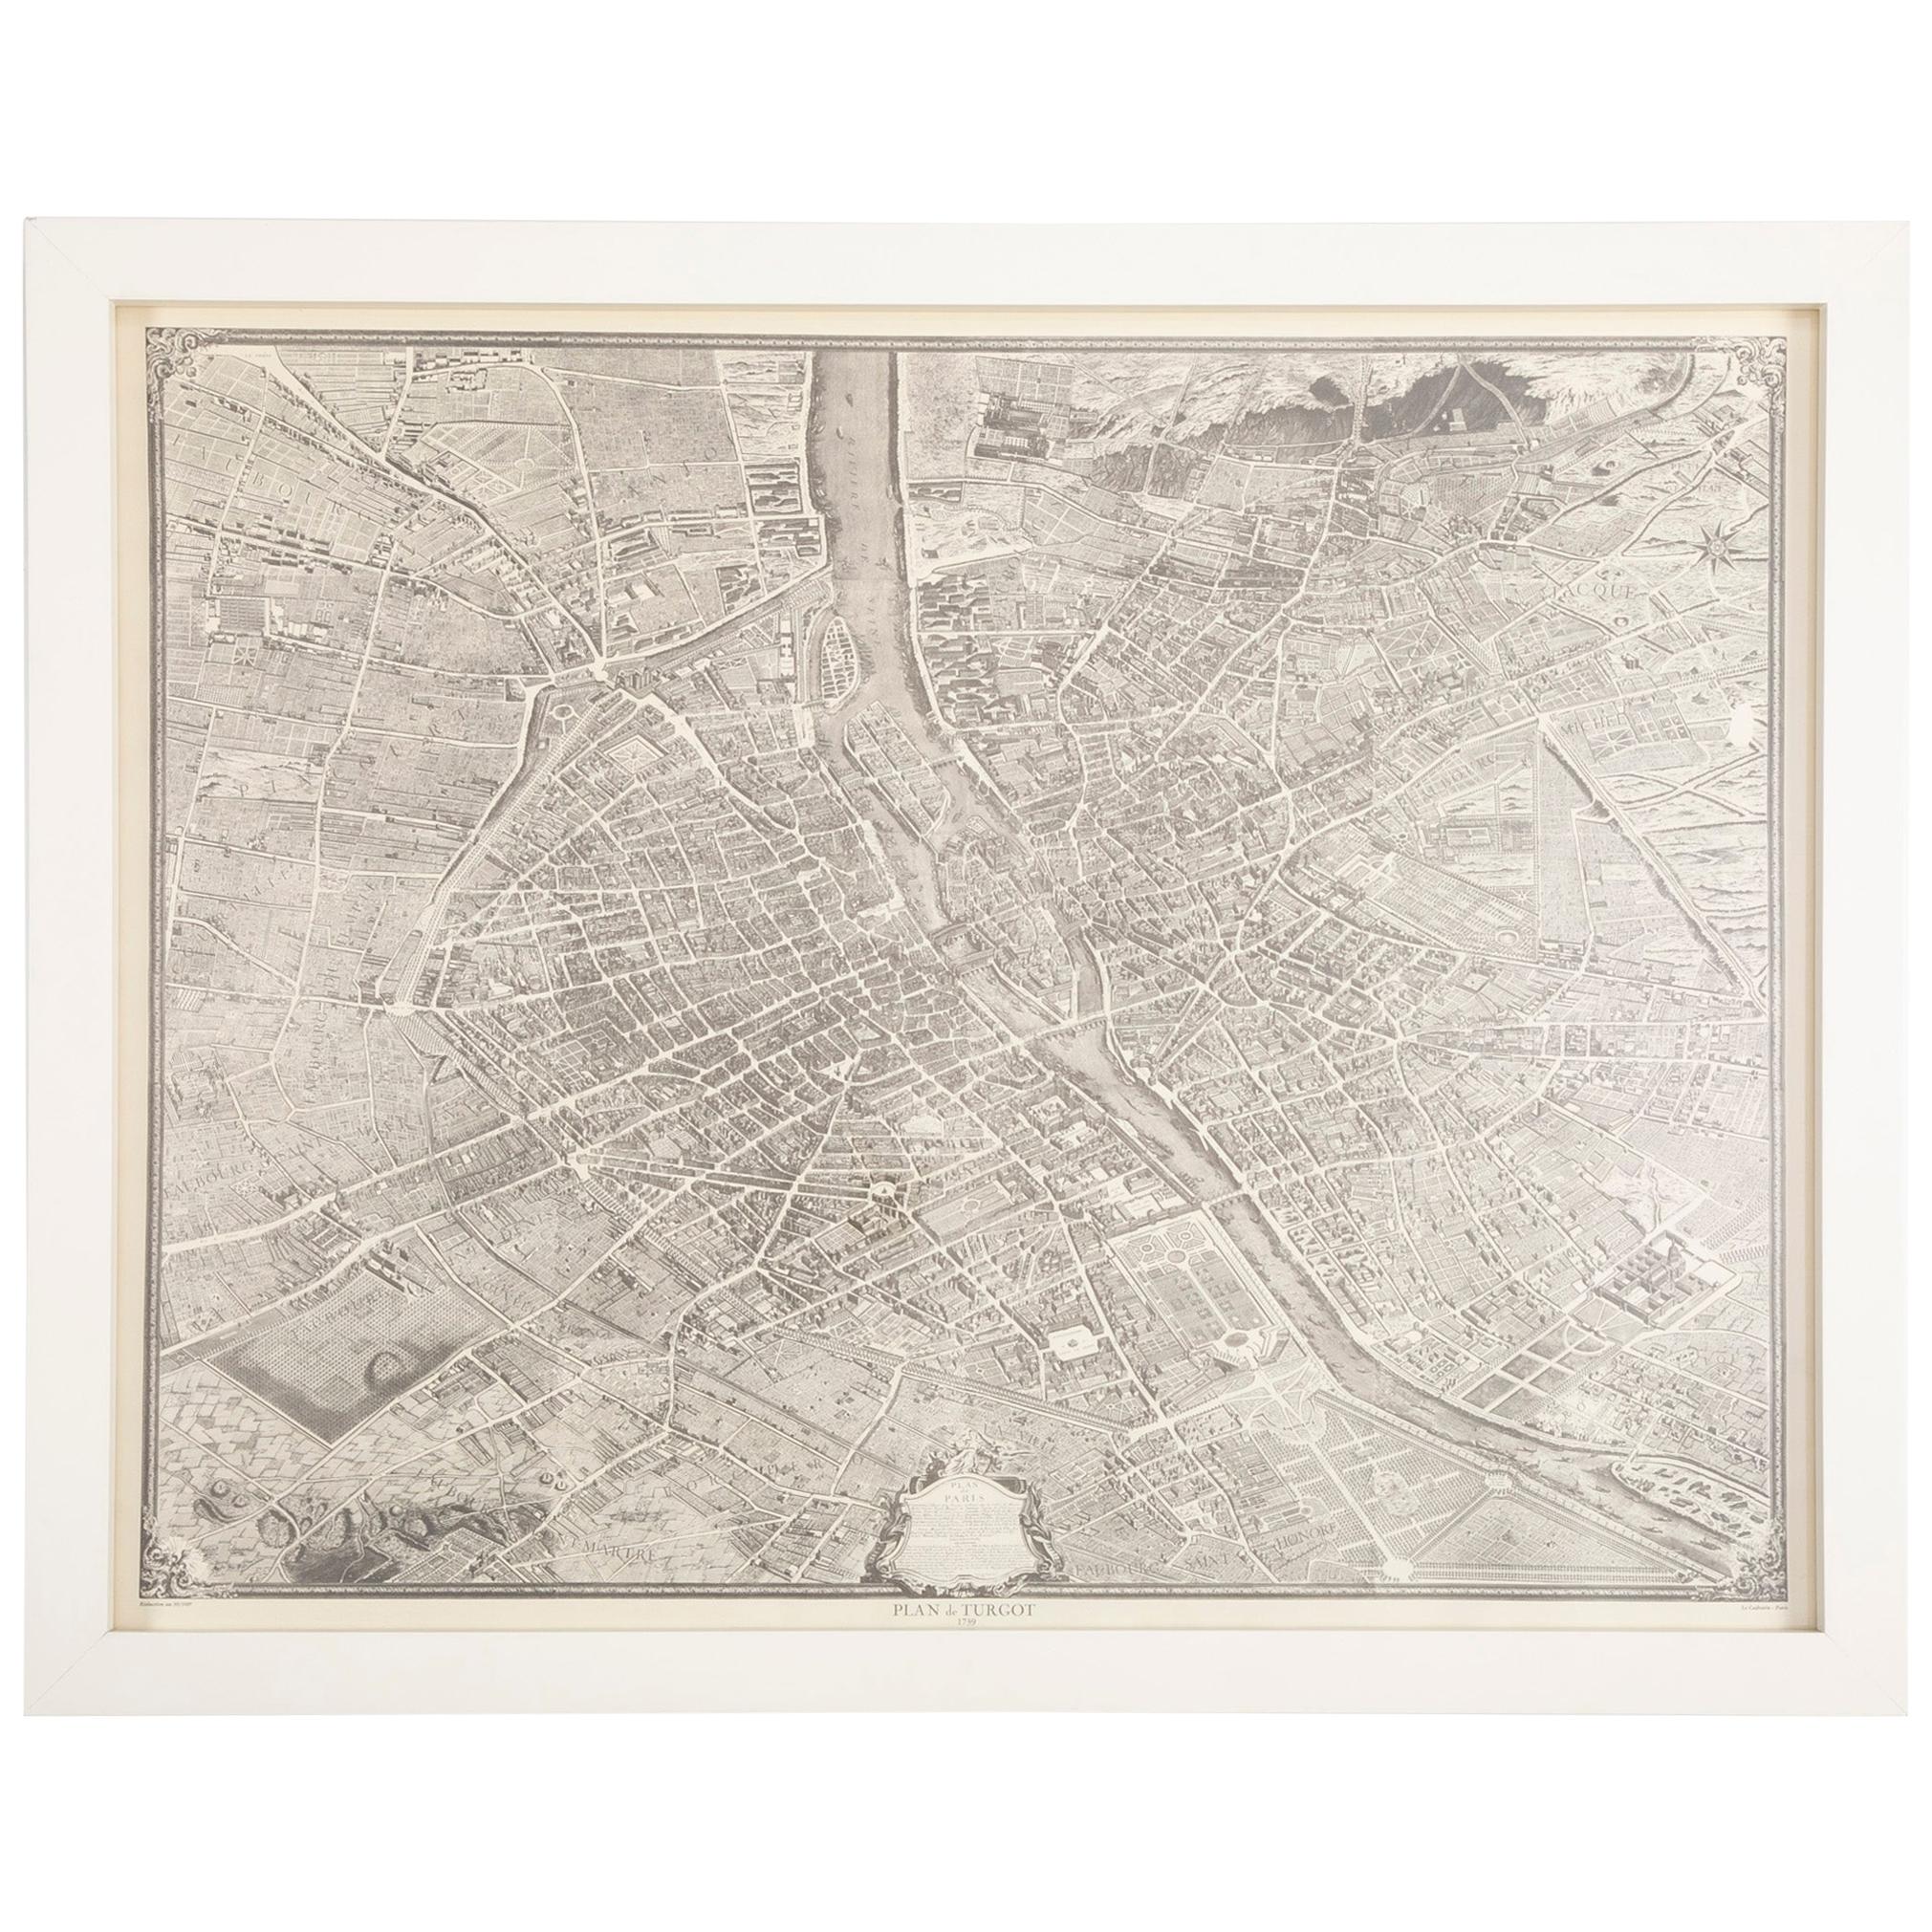 Vintage Map of Paris after the Original Turgot Plan of 1739